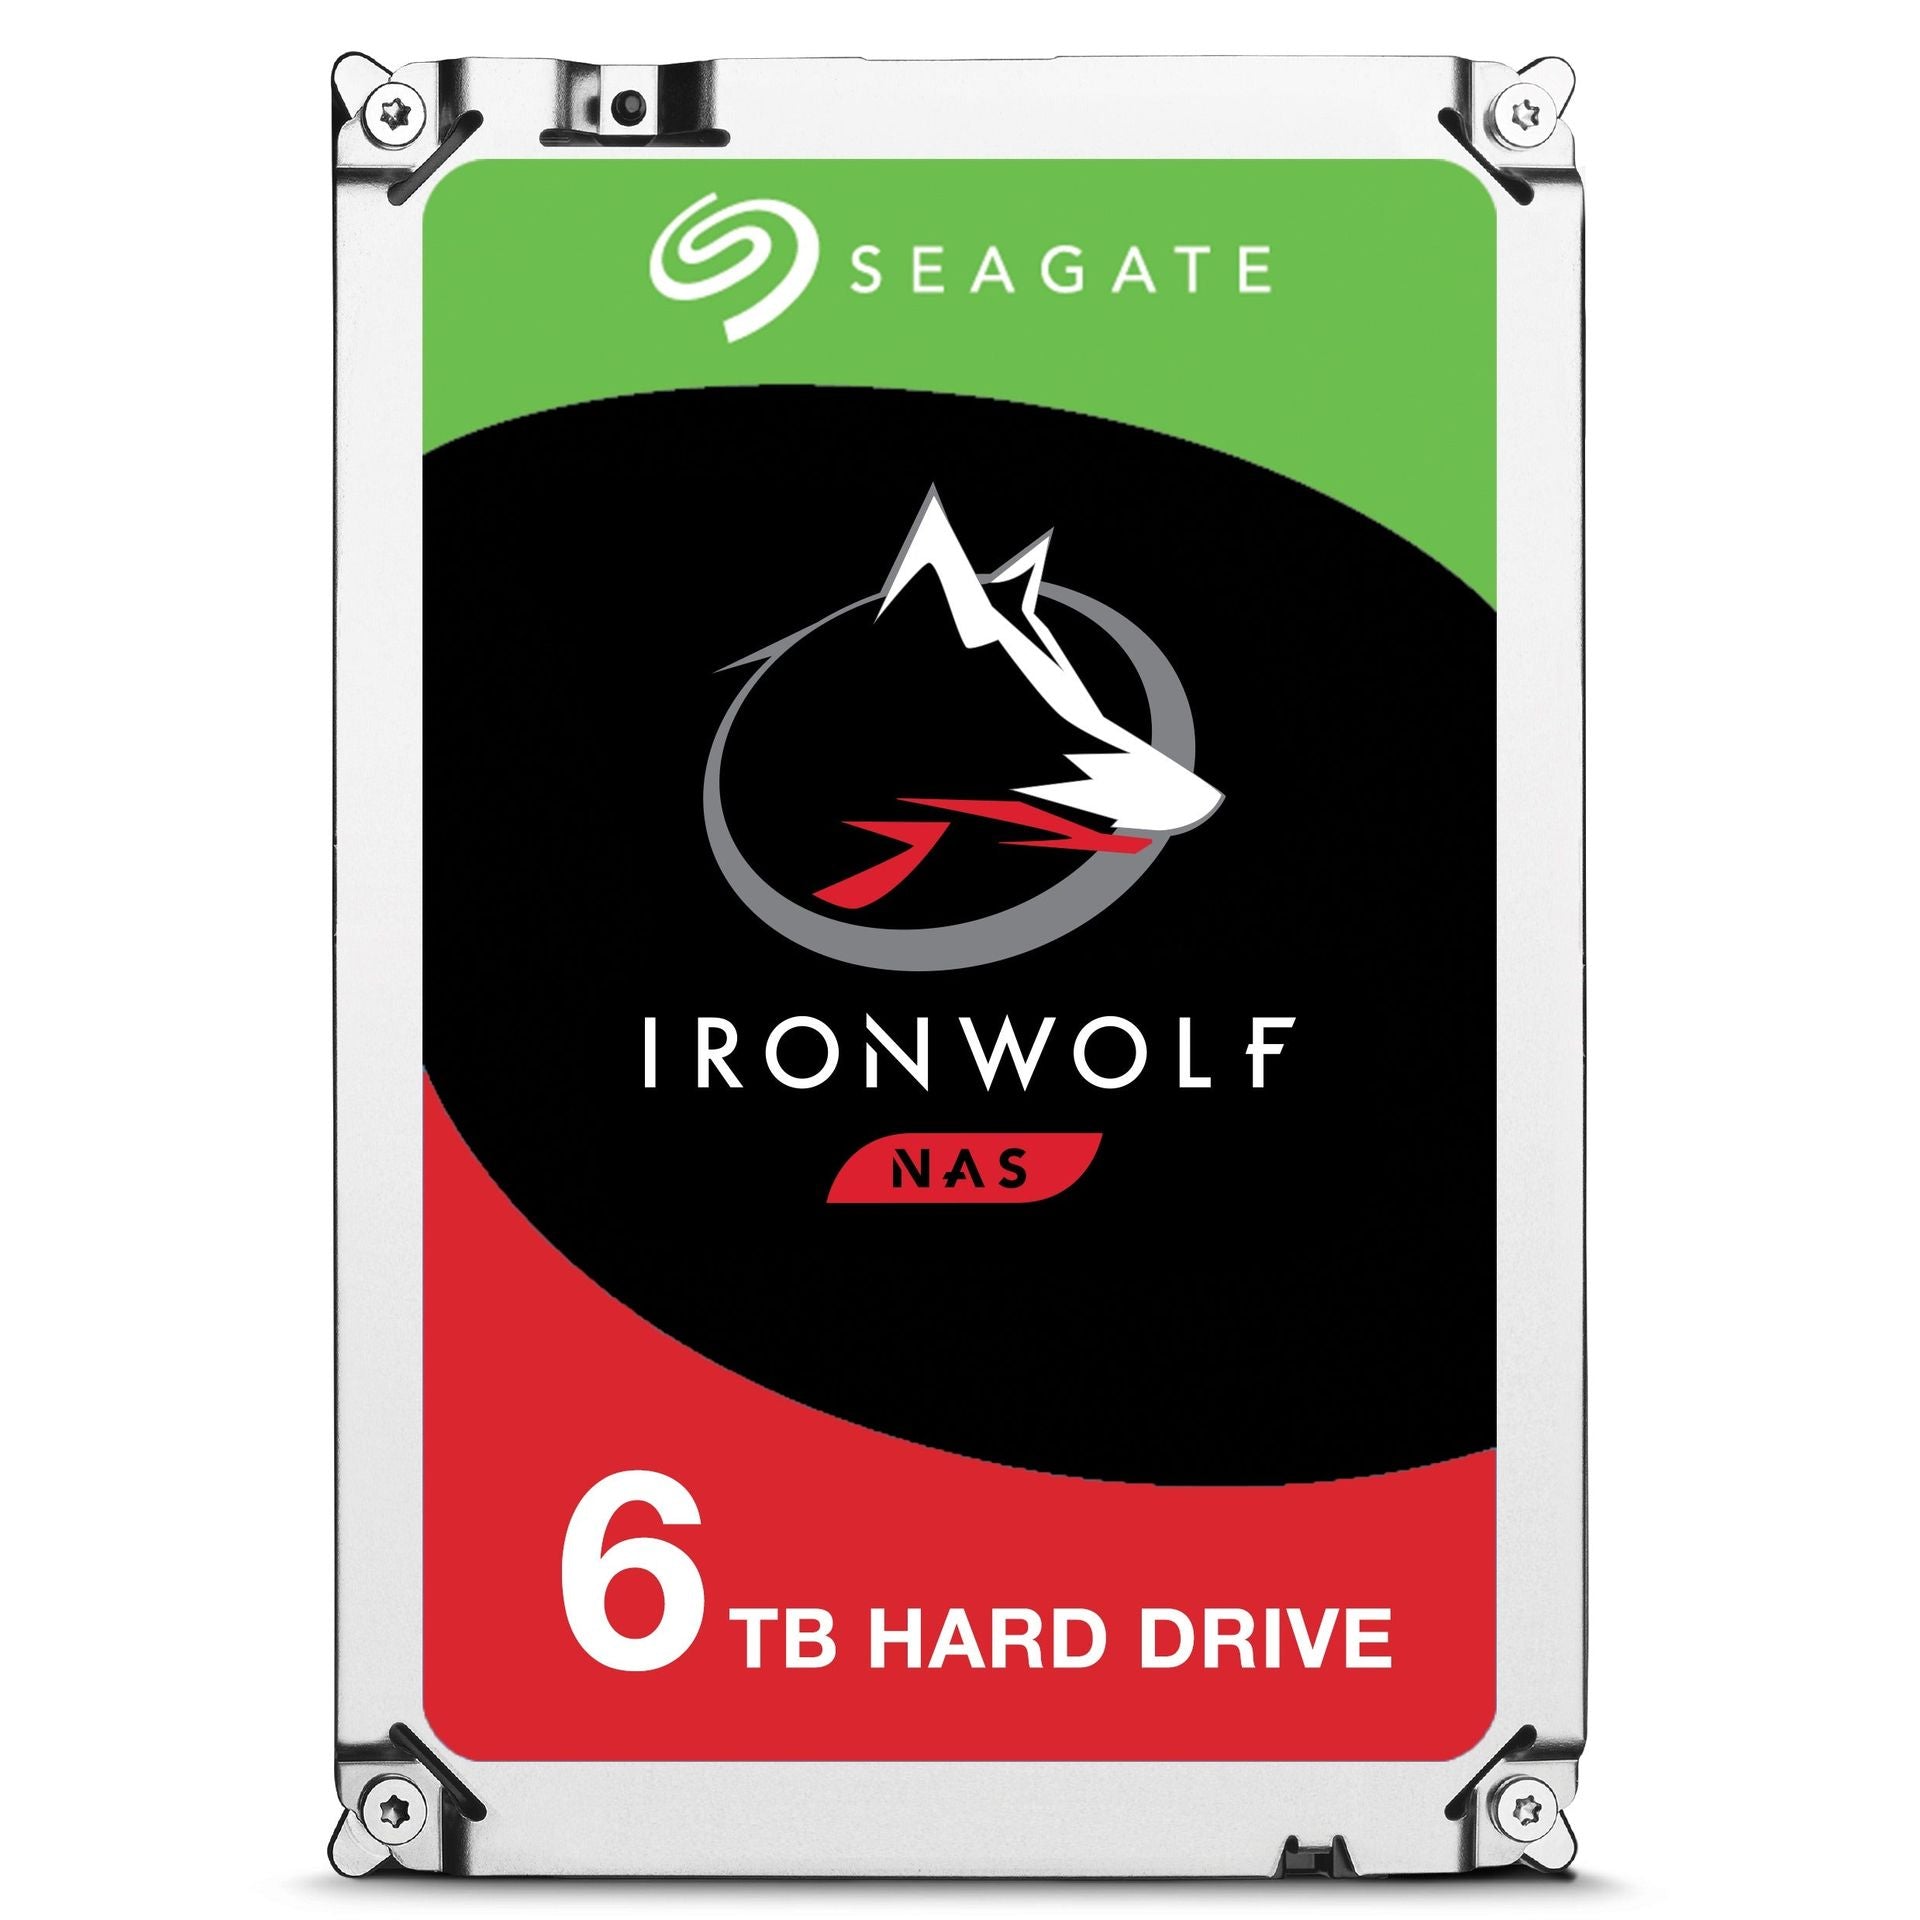 Seagate IronWolf 6TB internal hard drive 3.5" Serial ATA III HDD PN ST6000VN0033